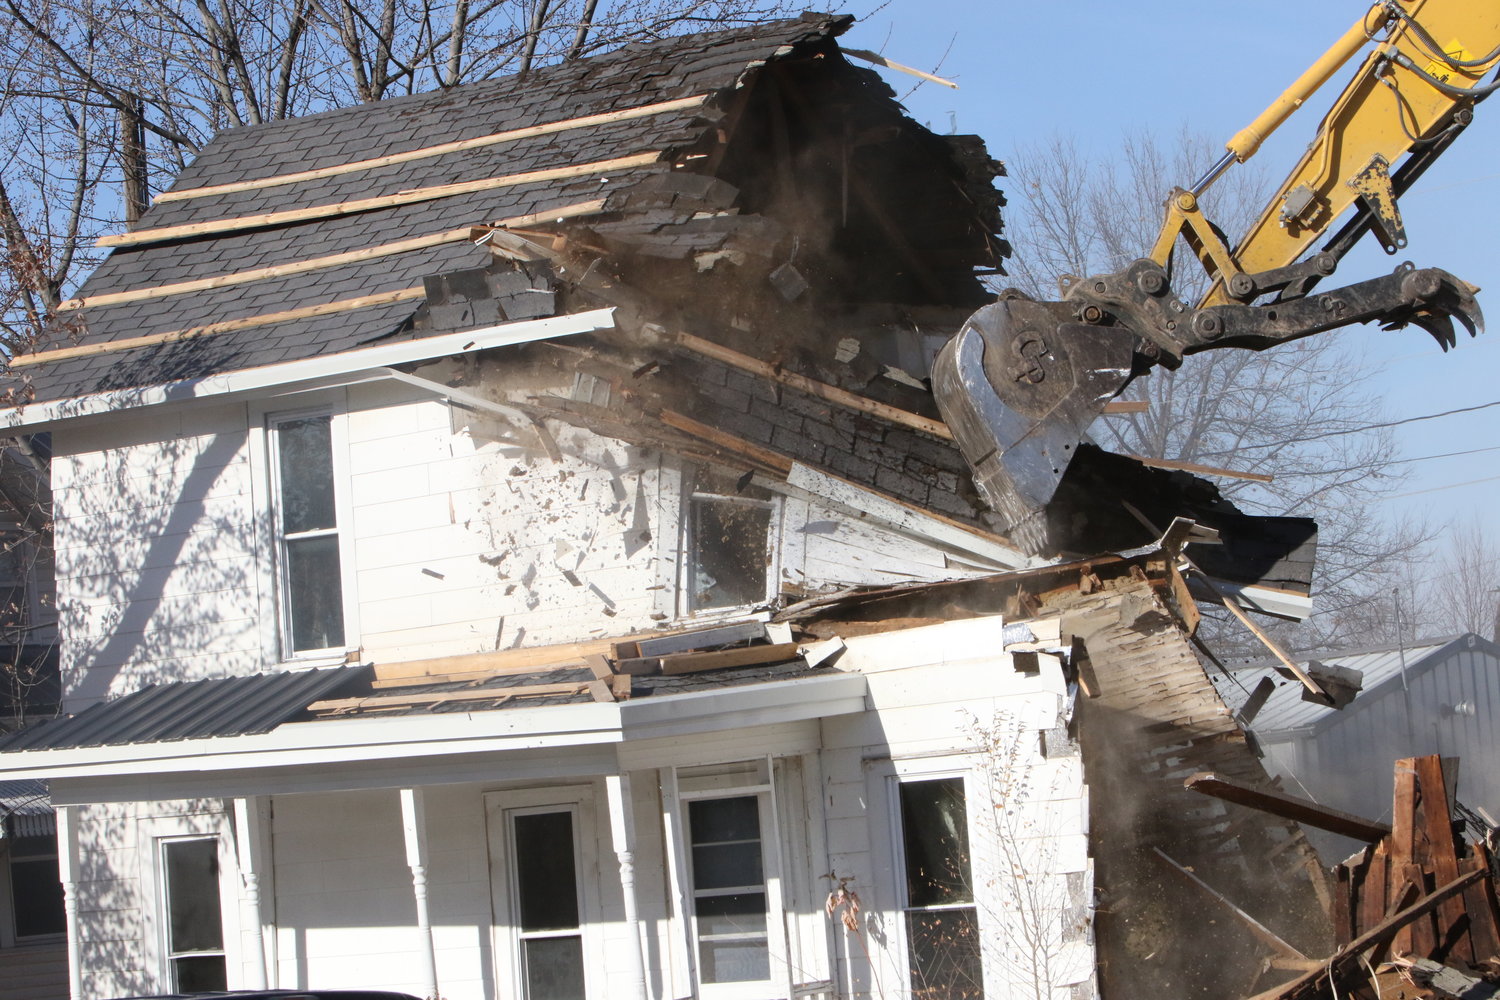 The same city-owned house was demolished on Nov. 28.